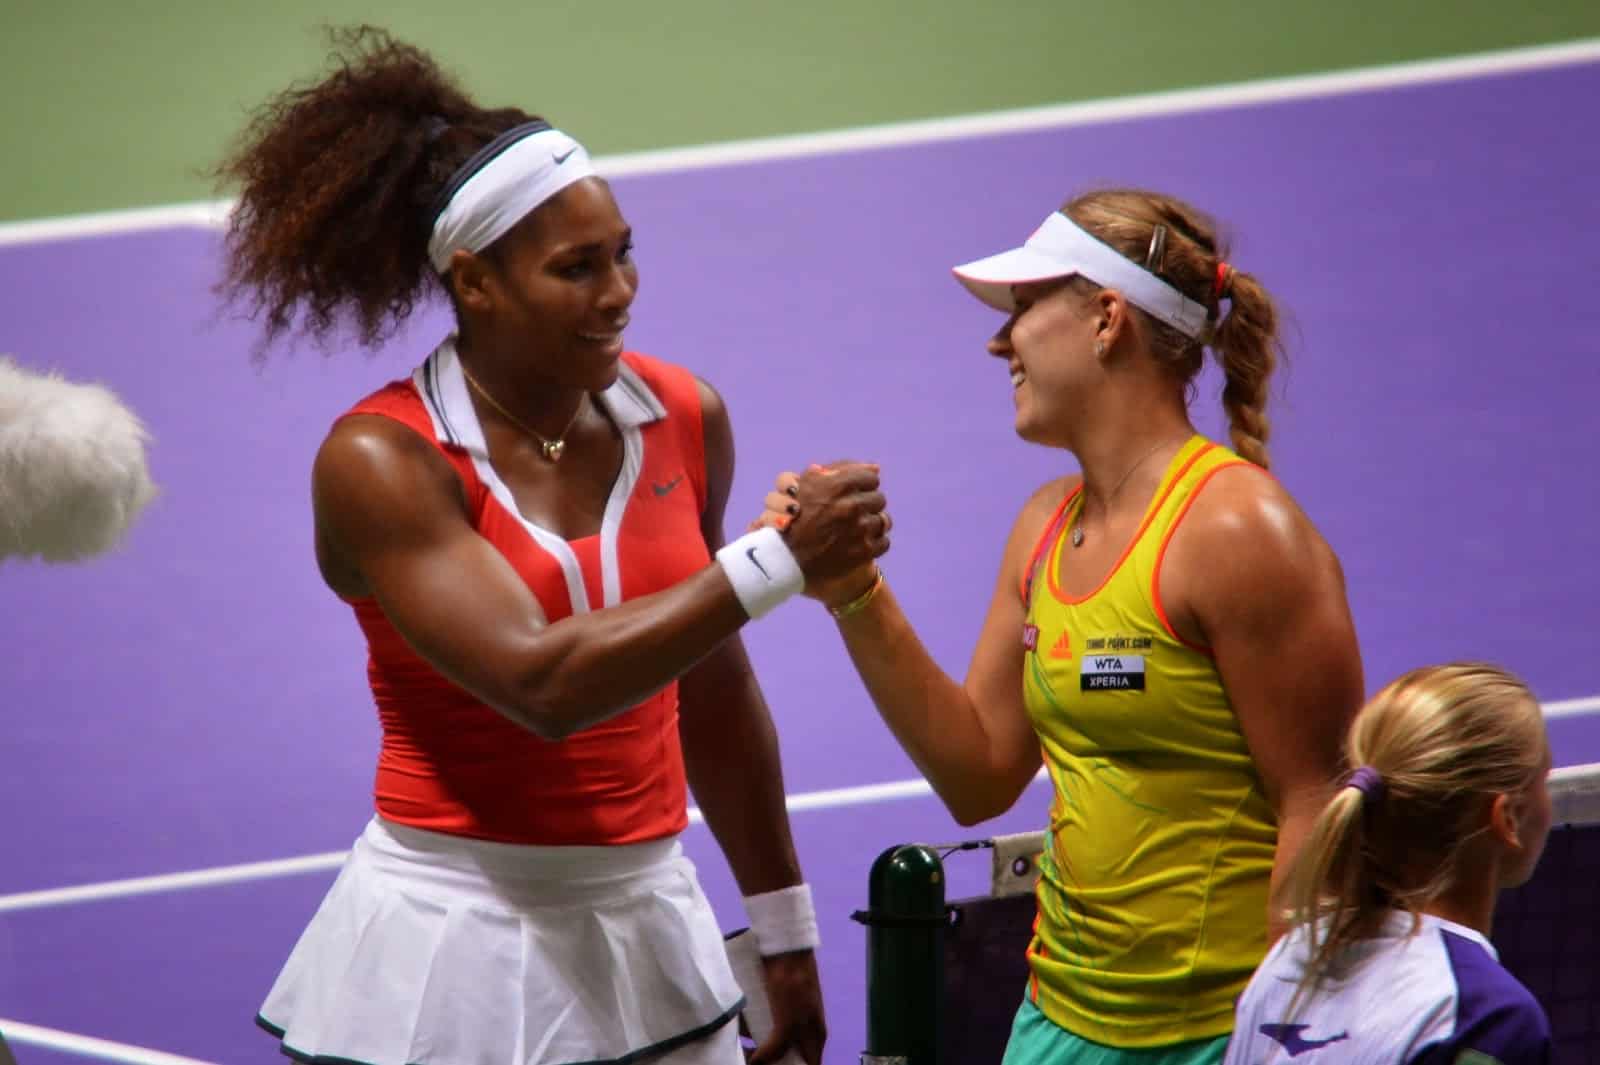 Serena Williams and Angelique Kerber in the 2012 WTA Championships at the Sinan Erdem Spor Salonu in Bakırköy, Istanbul, Turkey